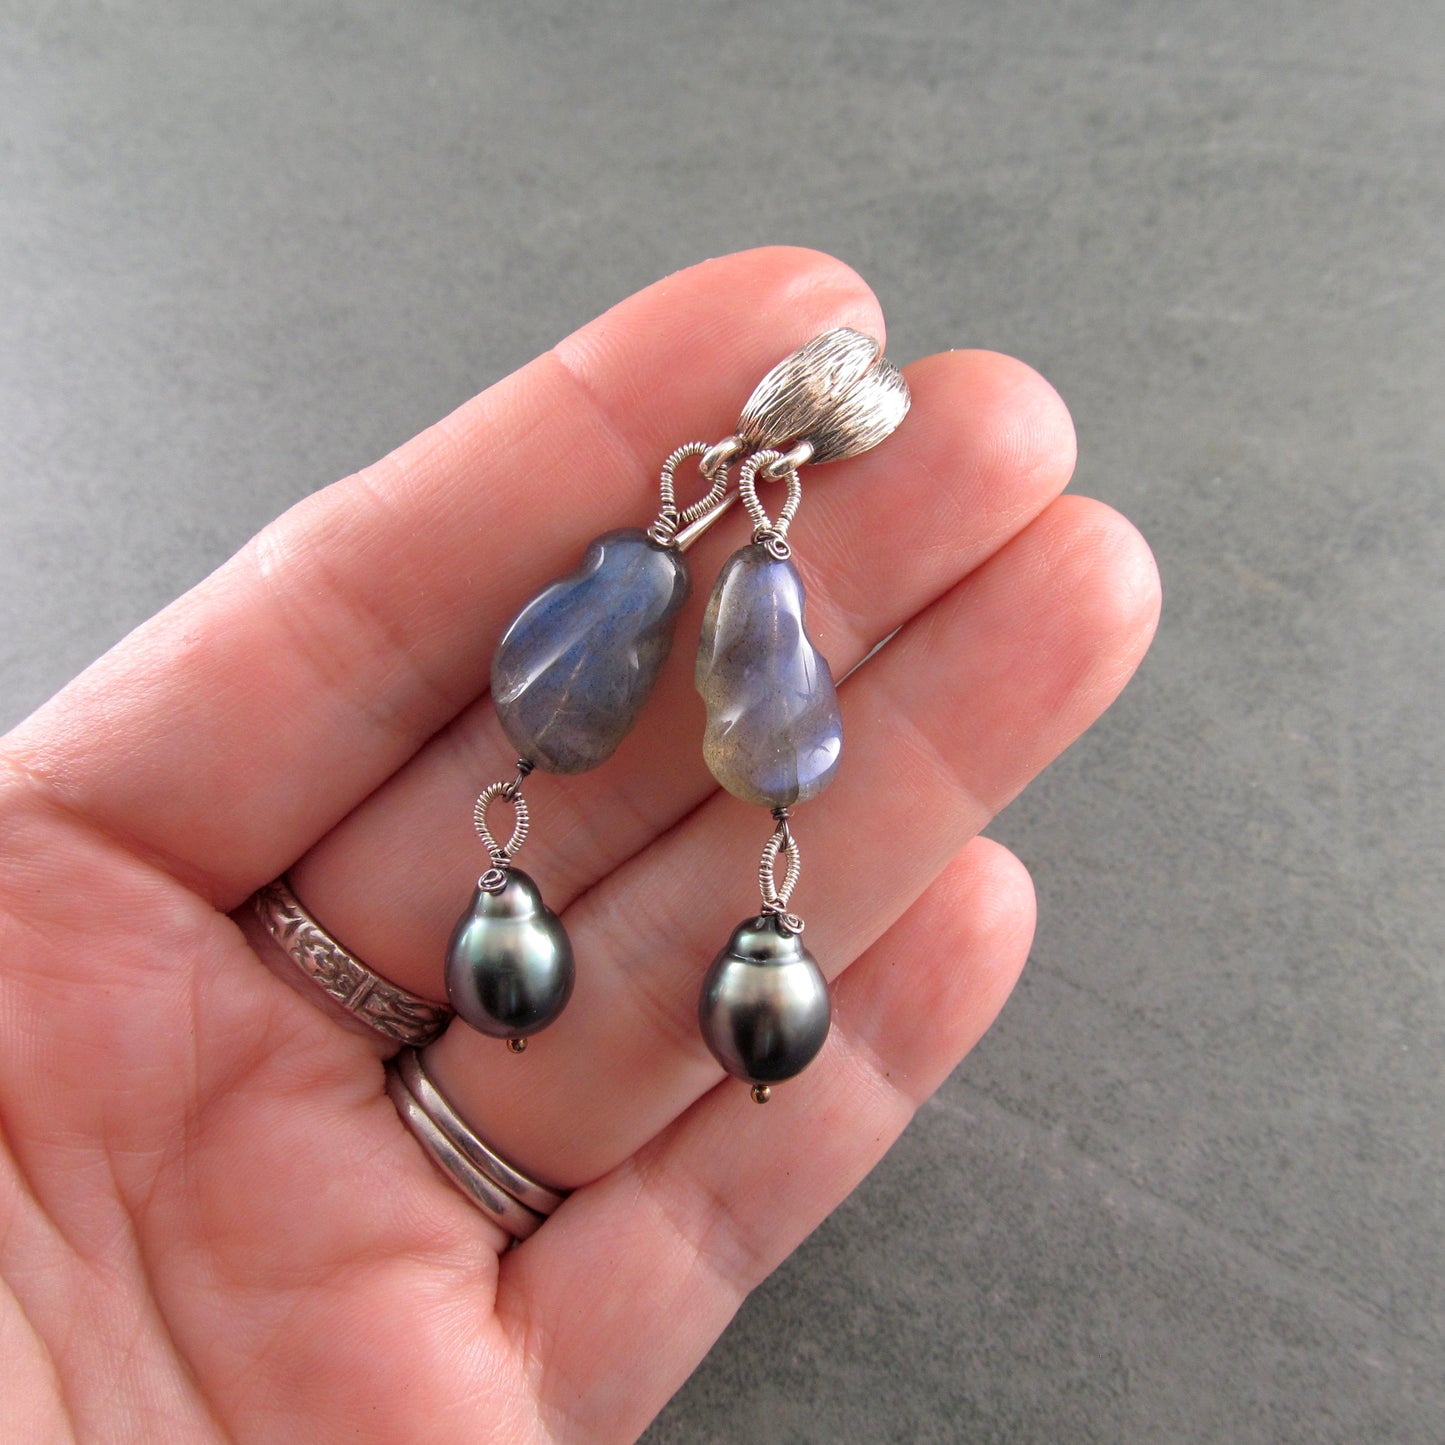 Tahitian pearl and blue labradorite earrings in sterling silver